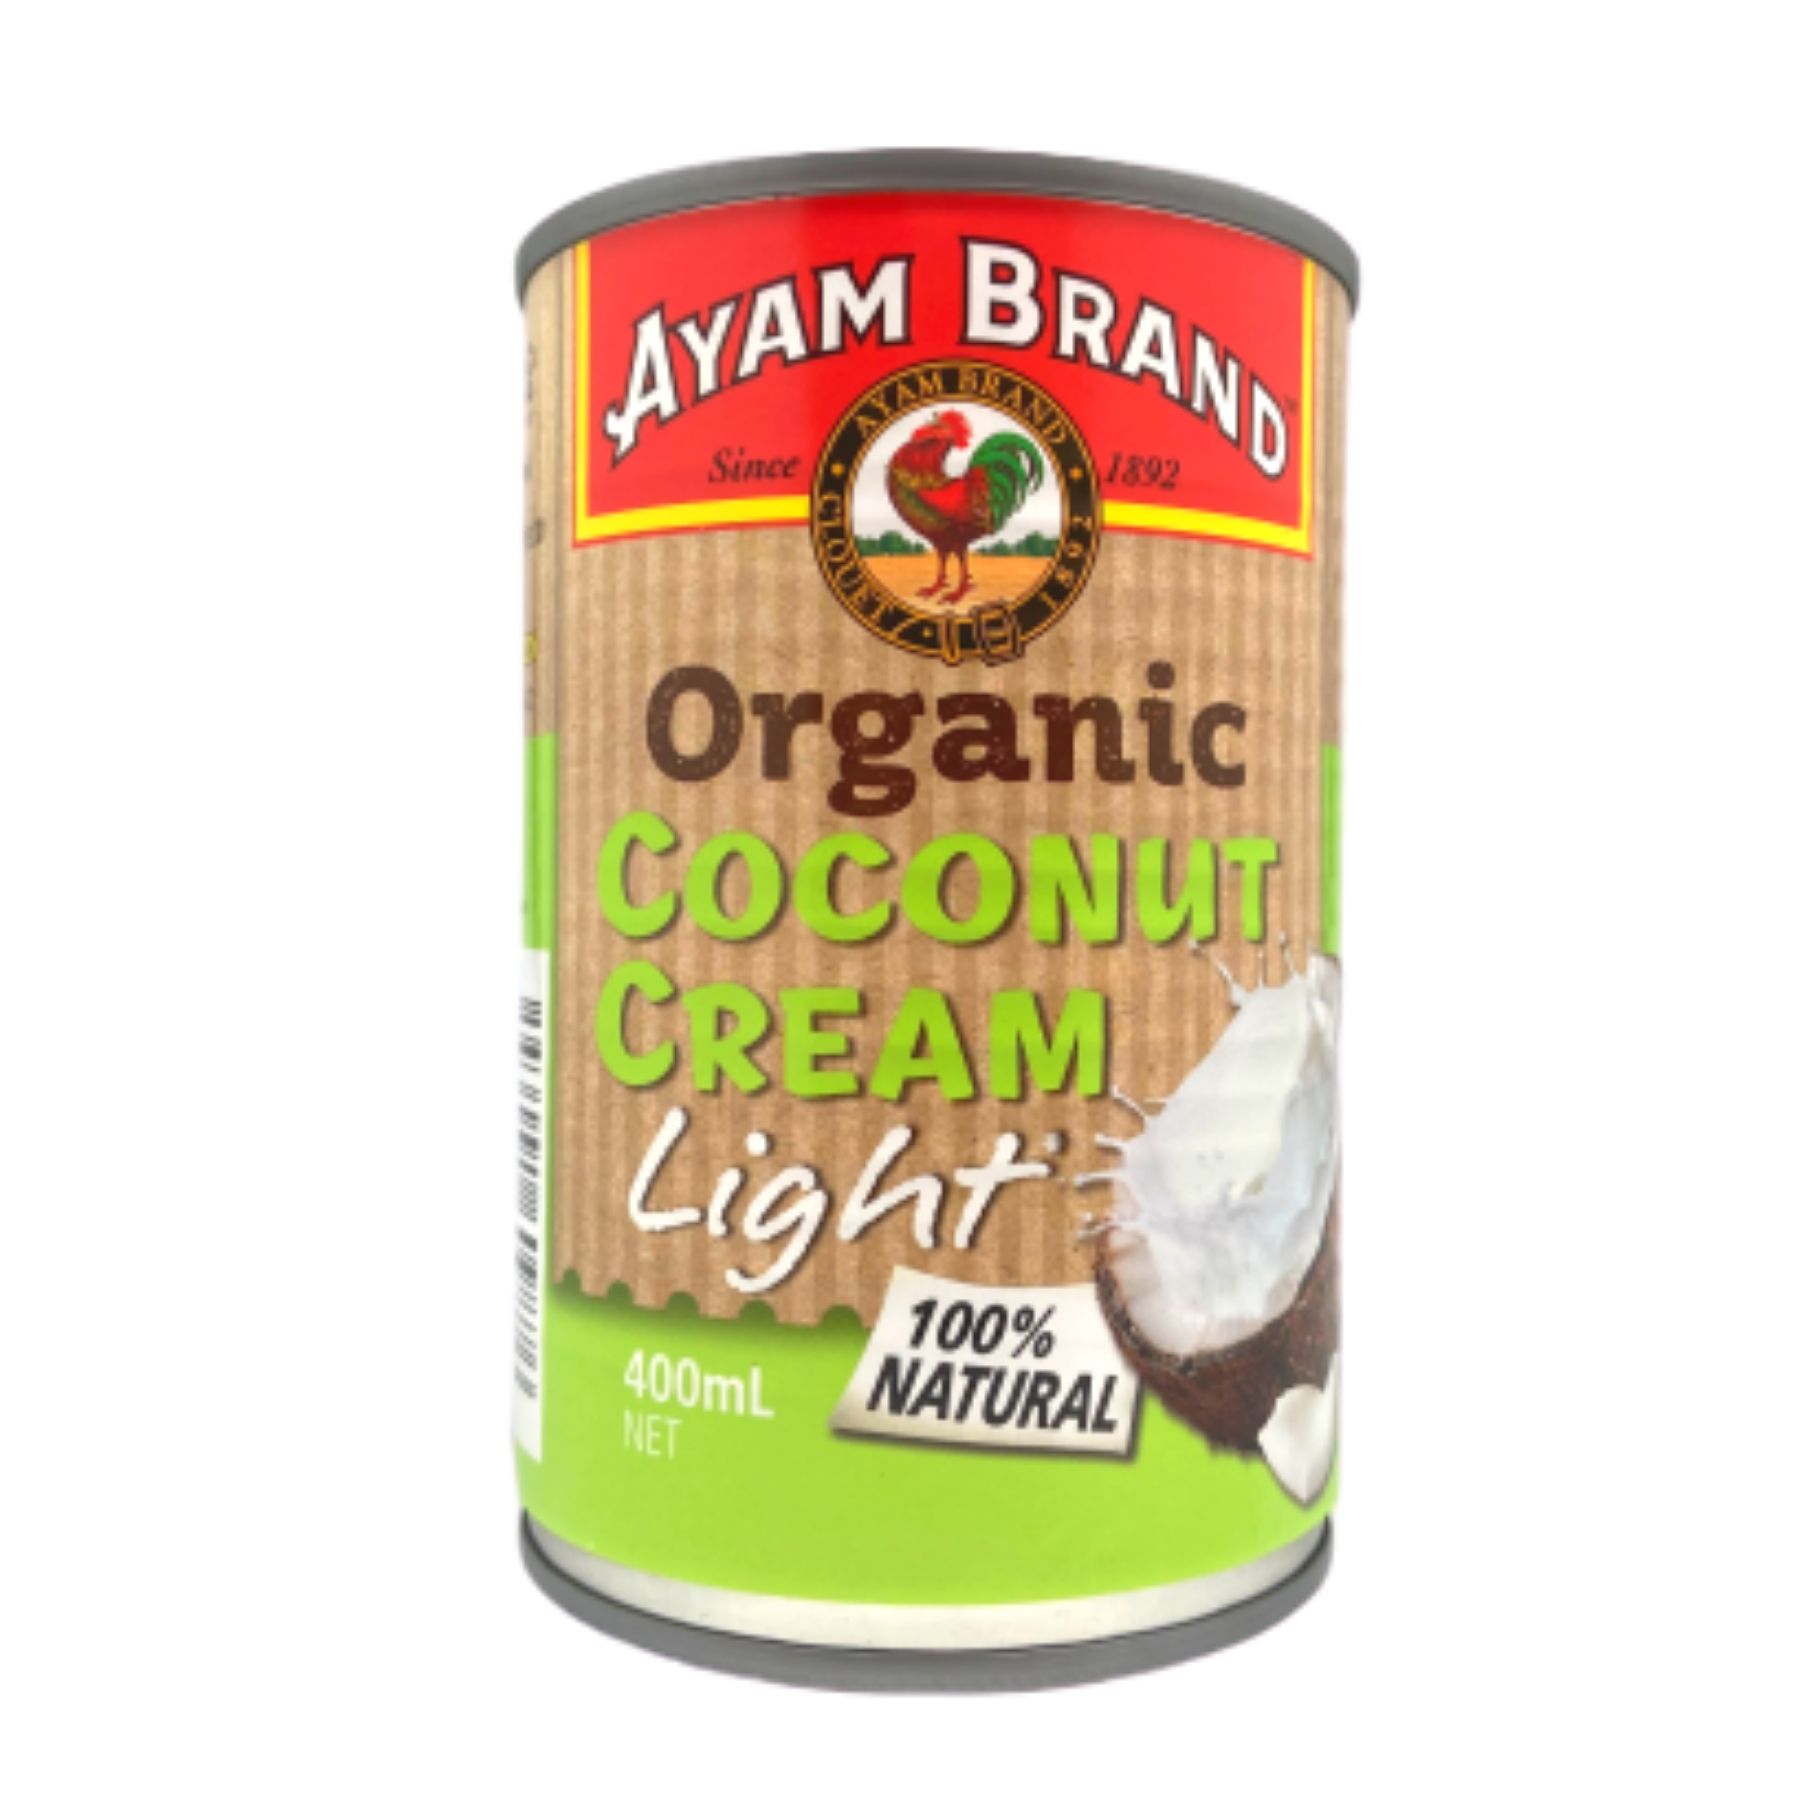 Ayam Brand Organic Coconut Cream Light 400ml – ZENXIN Singapore